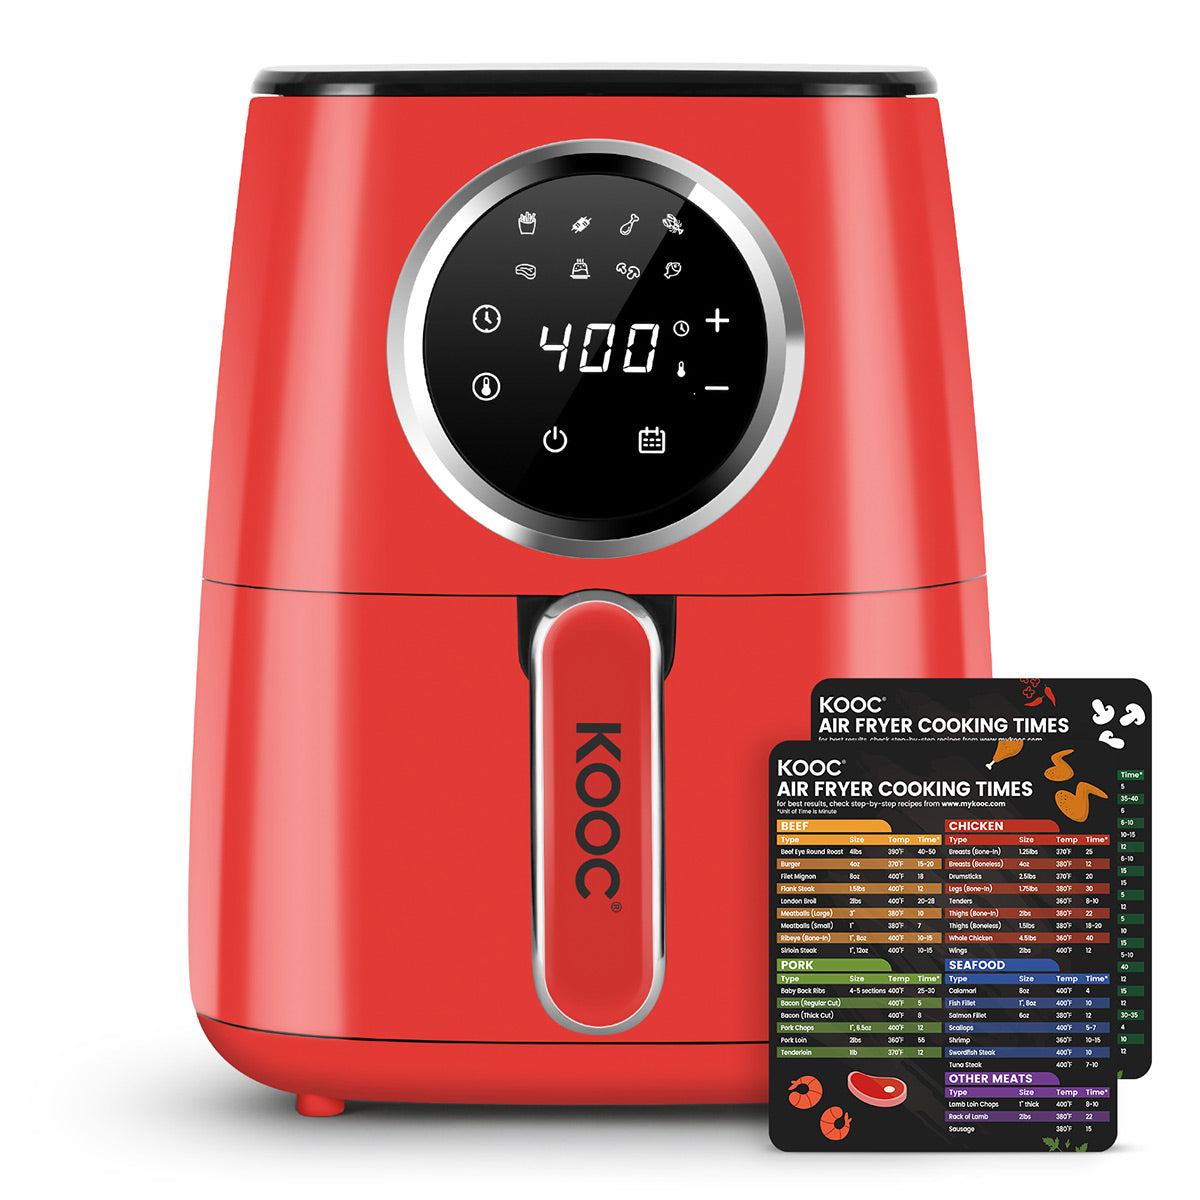 KOOC - Air Fryer Recipe Magnetic Cheat Sheet